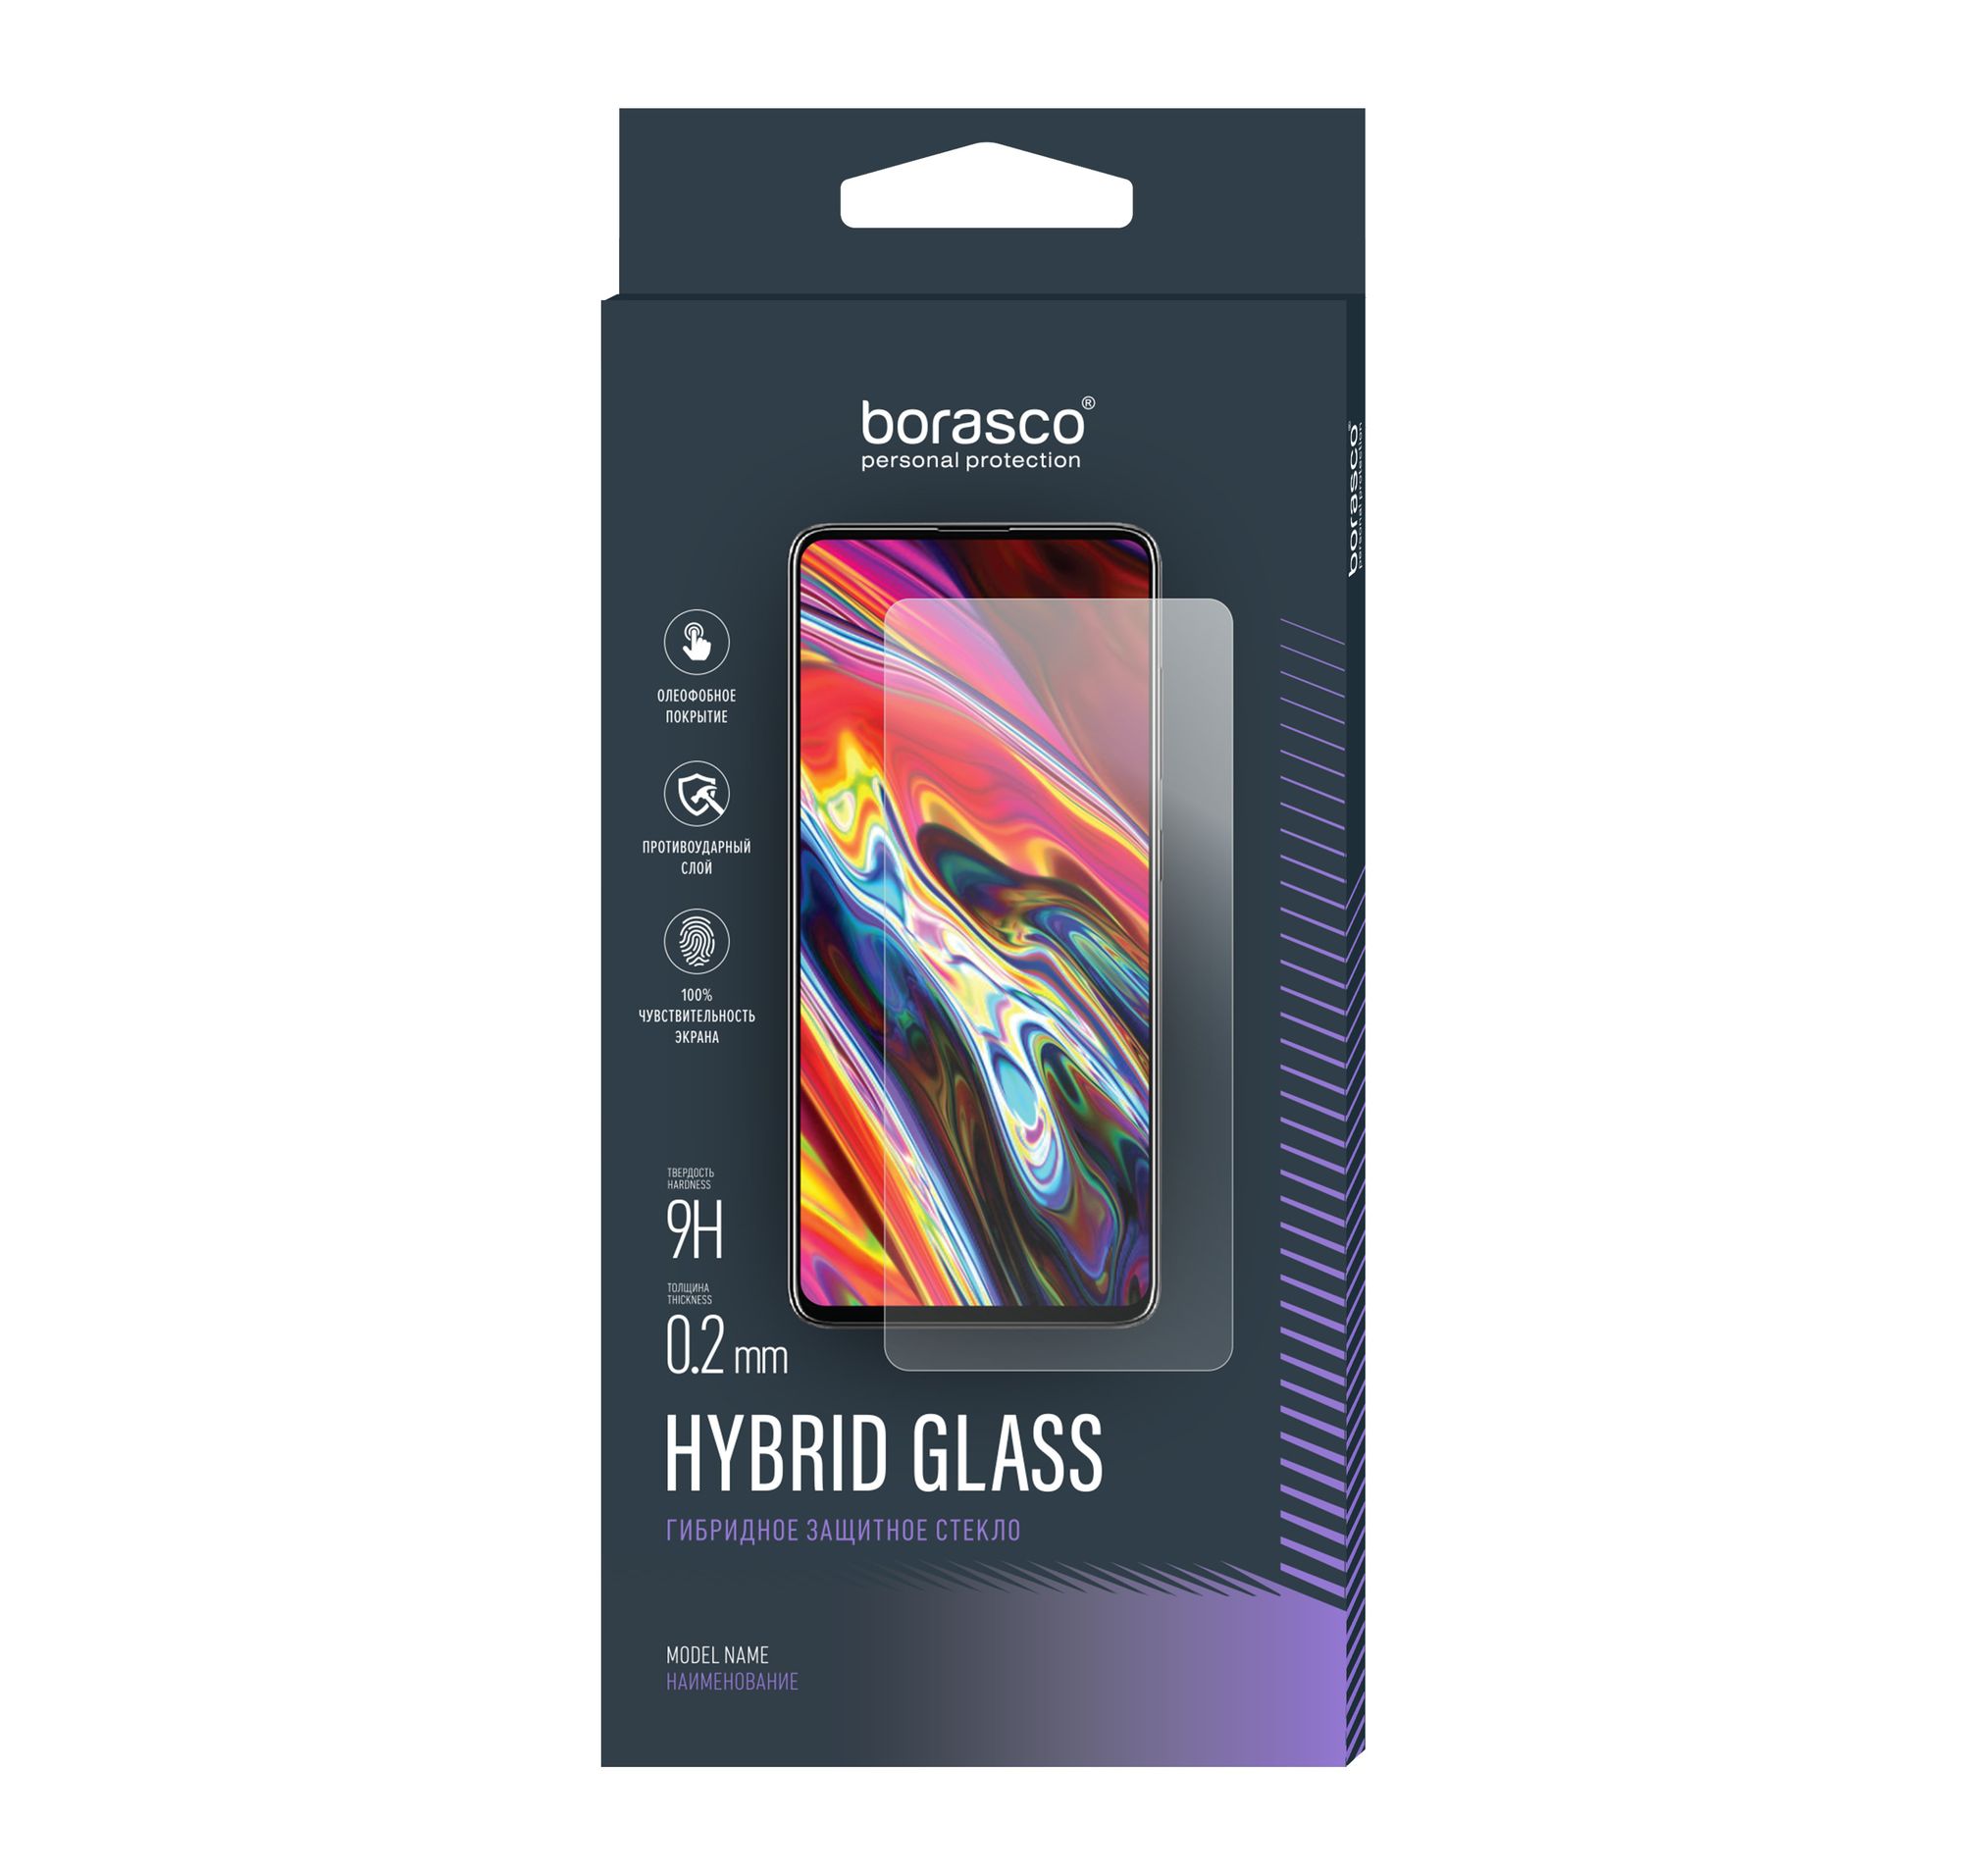 Стекло защитное Hybrid Glass VSP 0,26 мм для Motorola MOTO E Plus (XT1771) стекло защитное hybrid glass vsp 0 26 мм для motorola moto e plus xt1771